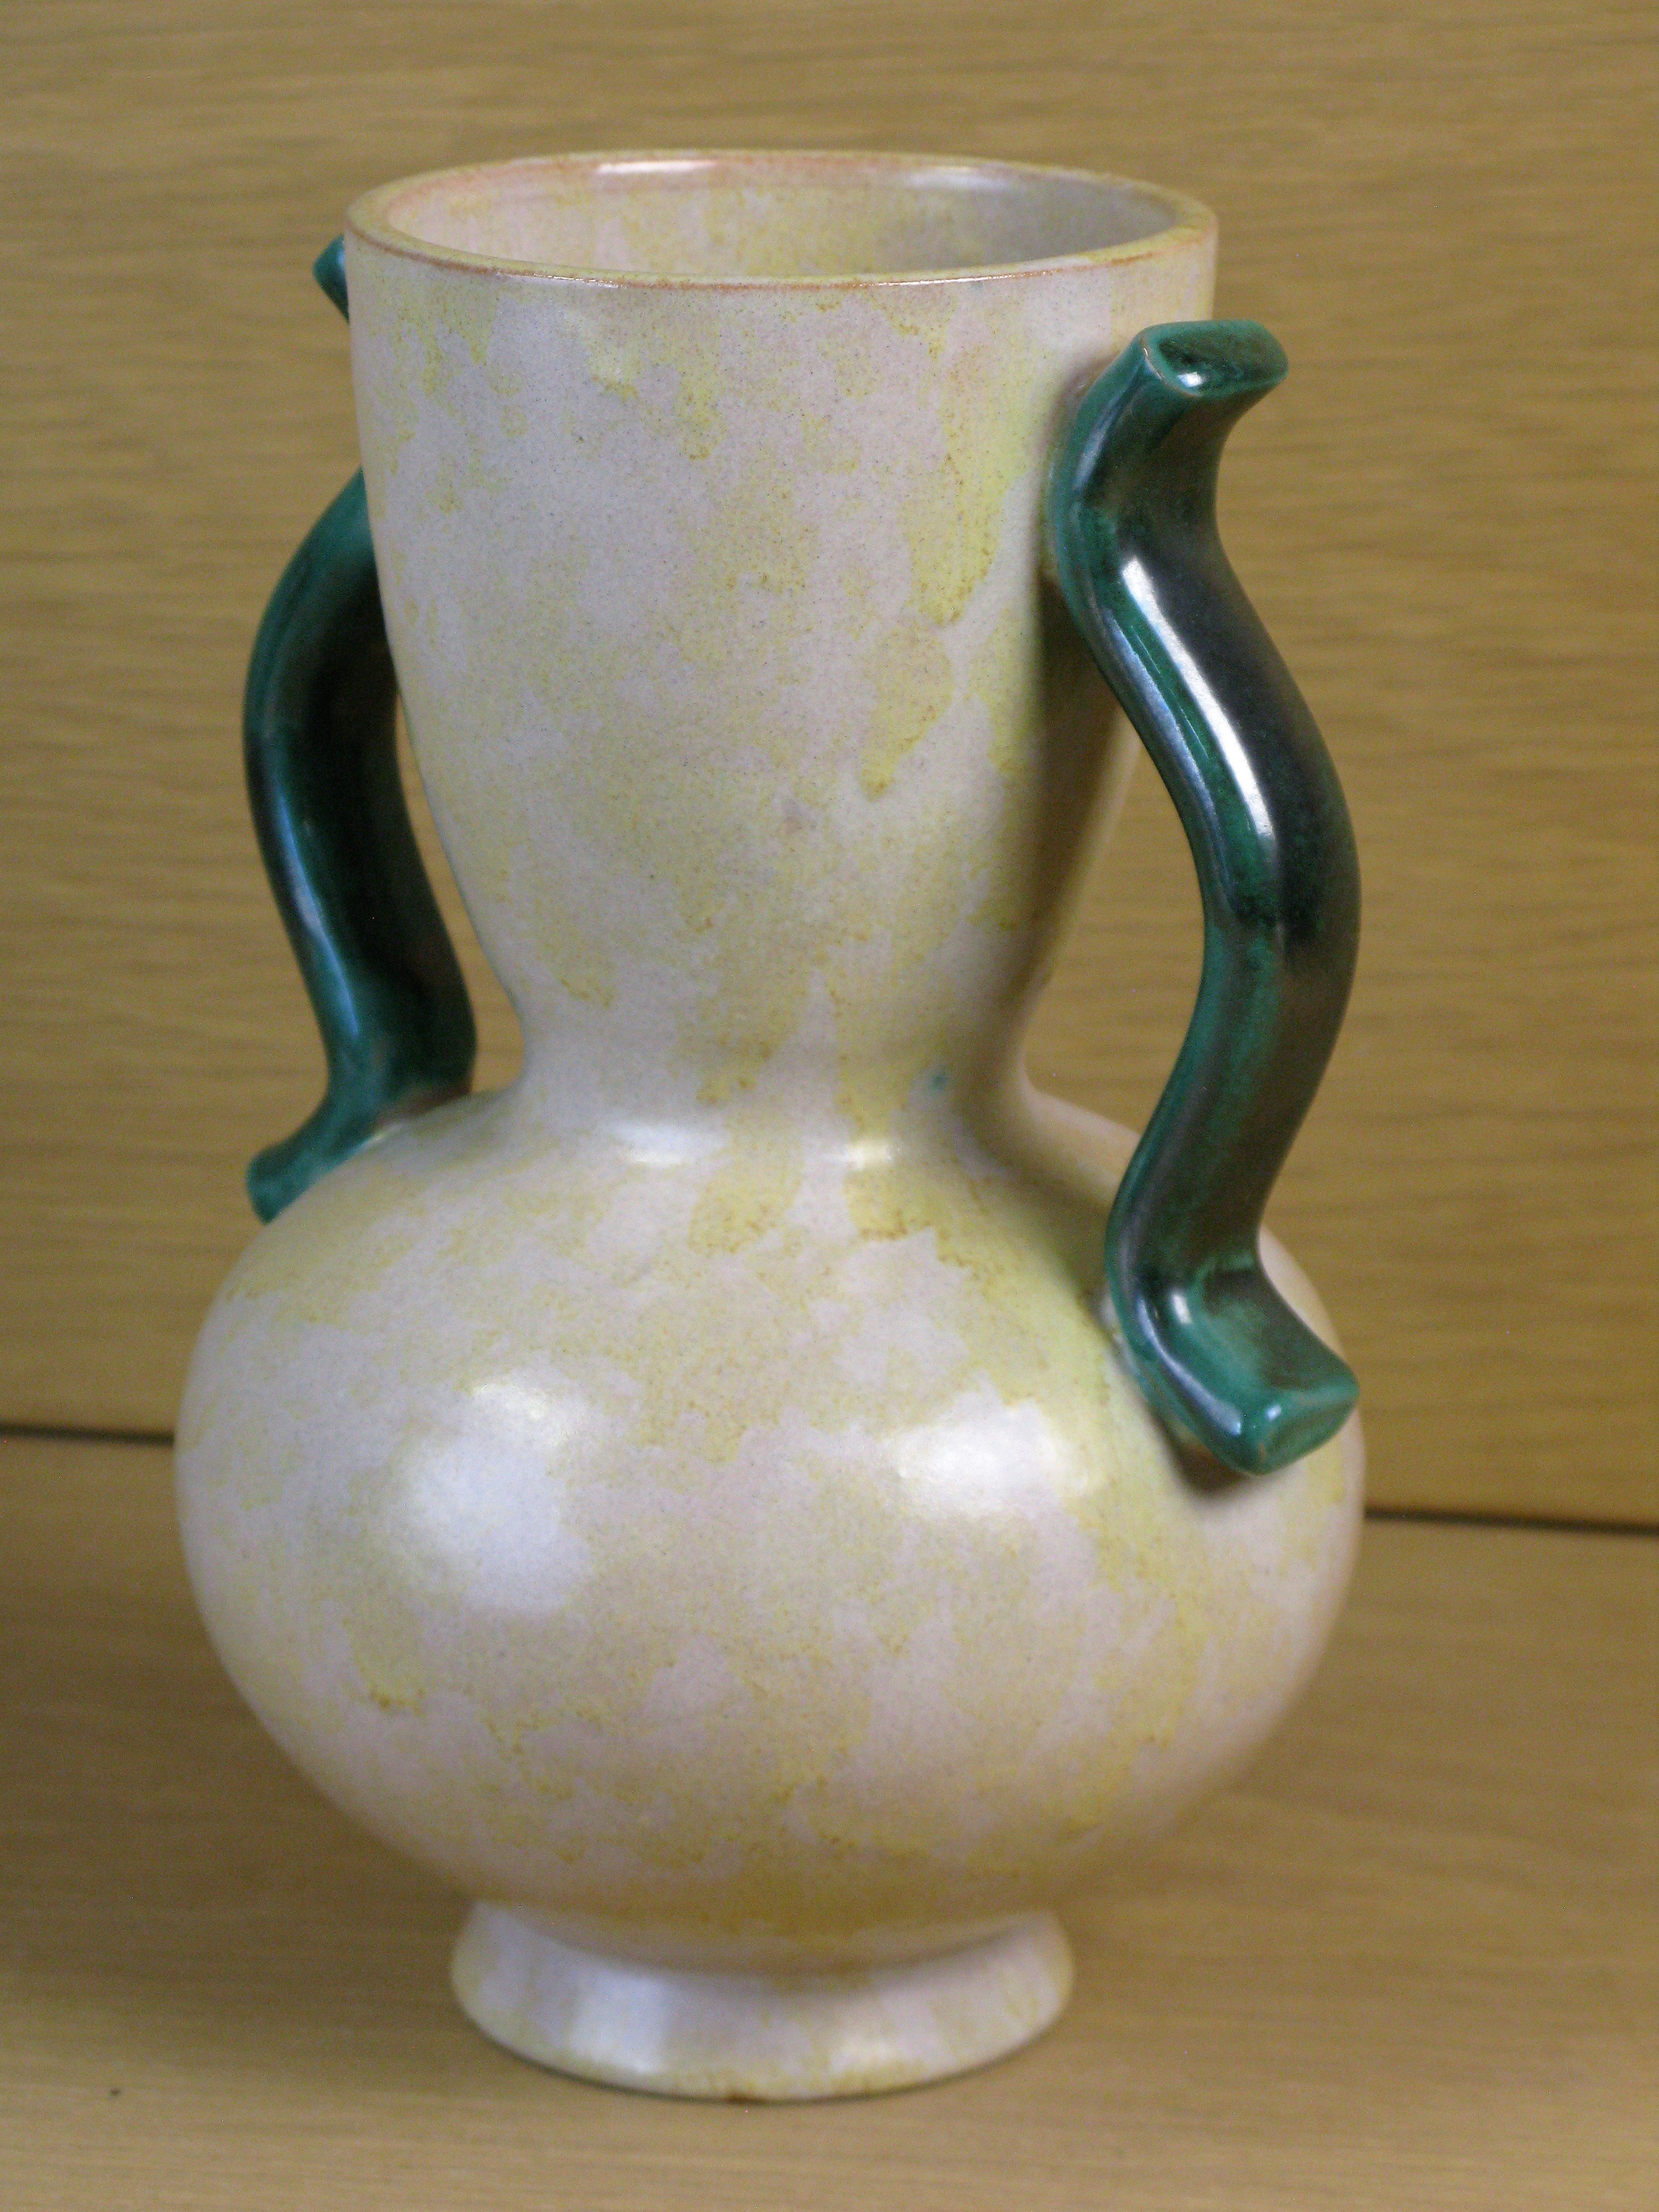 yelowish vase with green handles 283